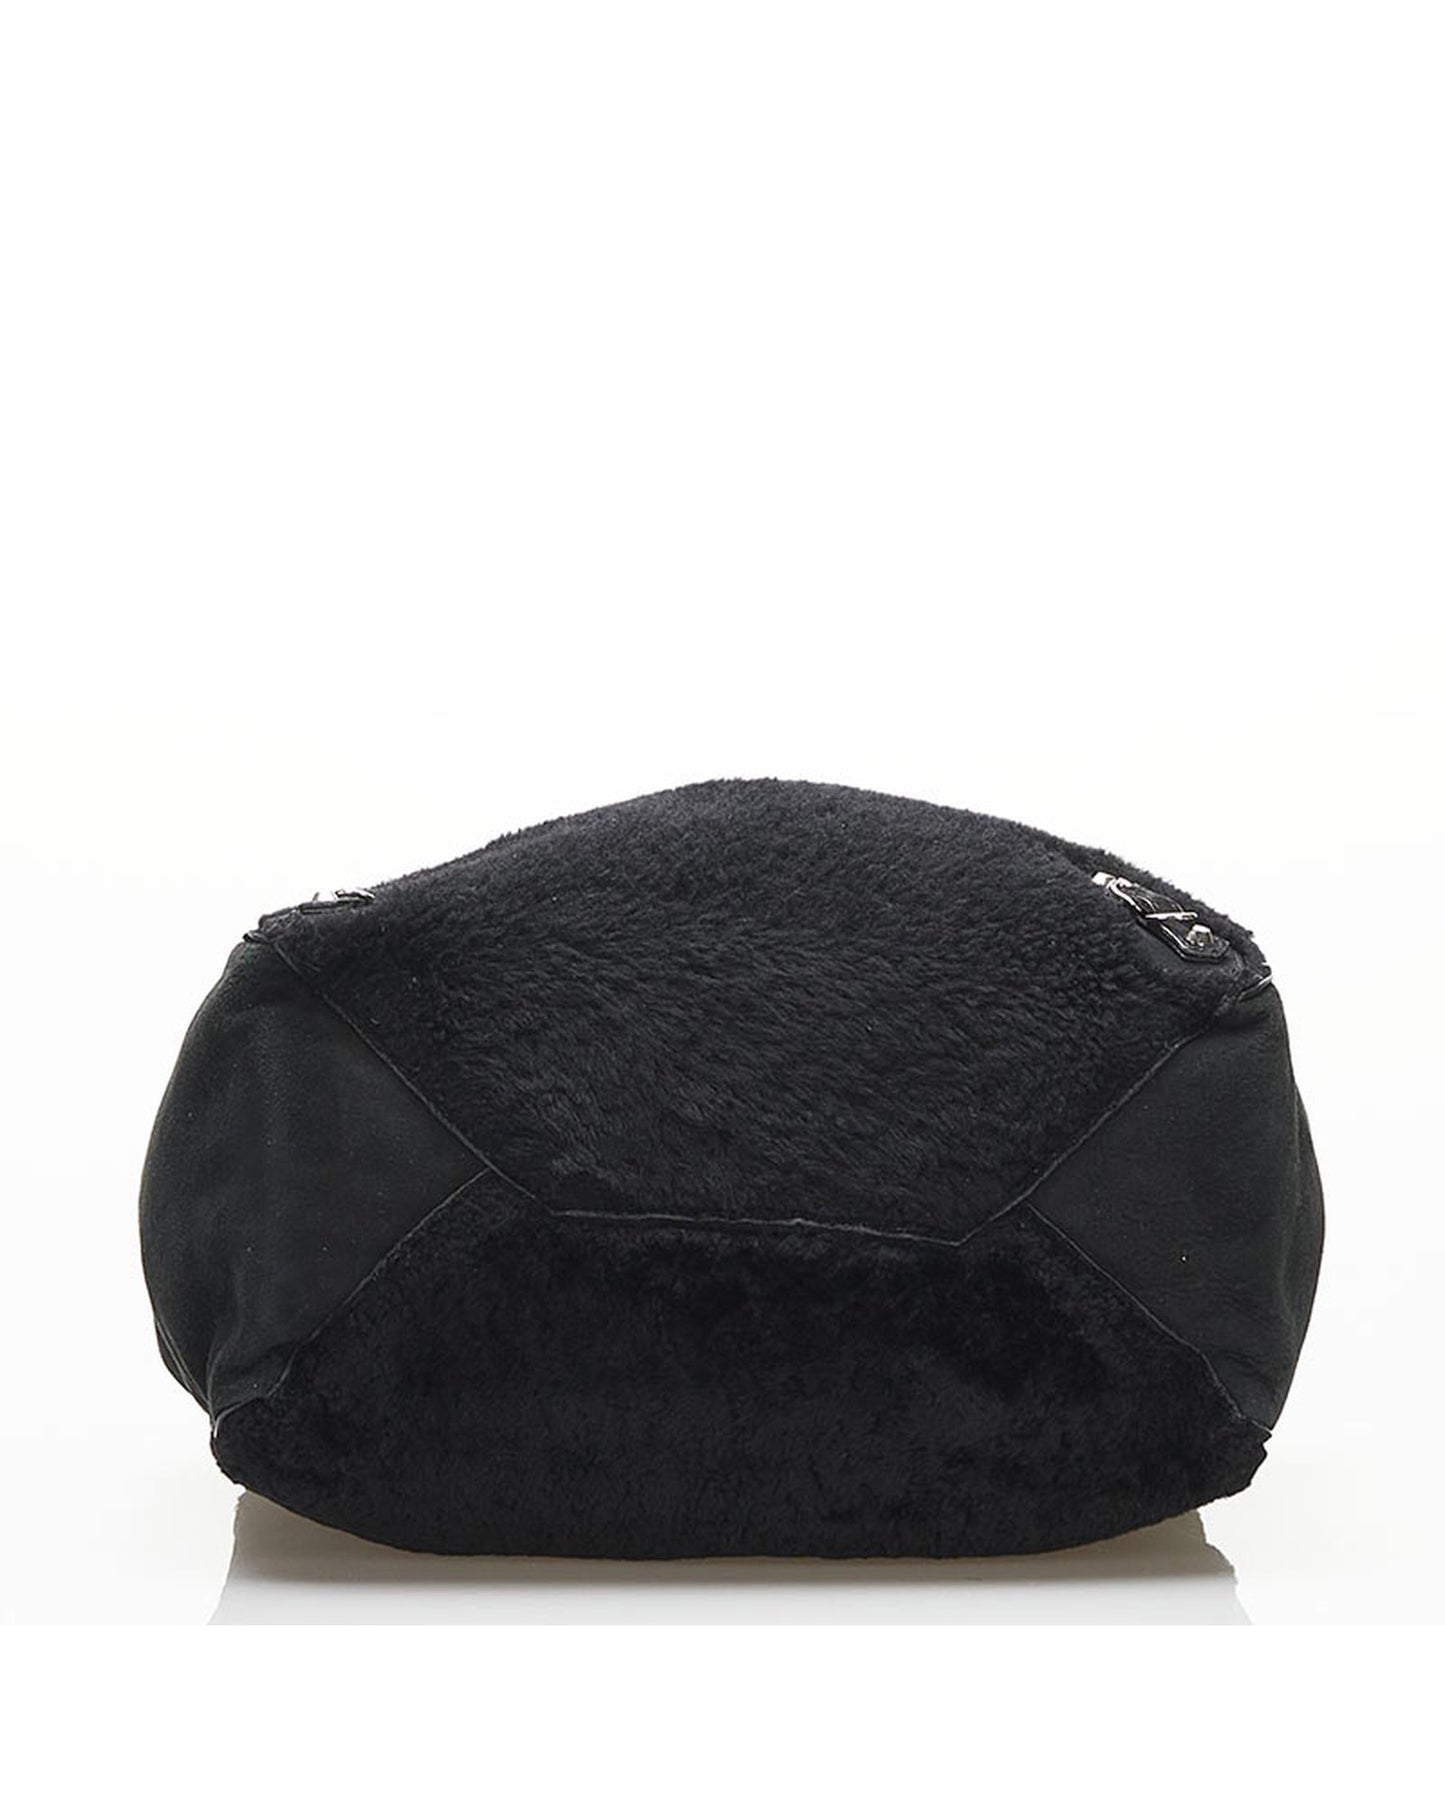 Balenciaga Women's Shearling Papier Tote Bag in Black in Black